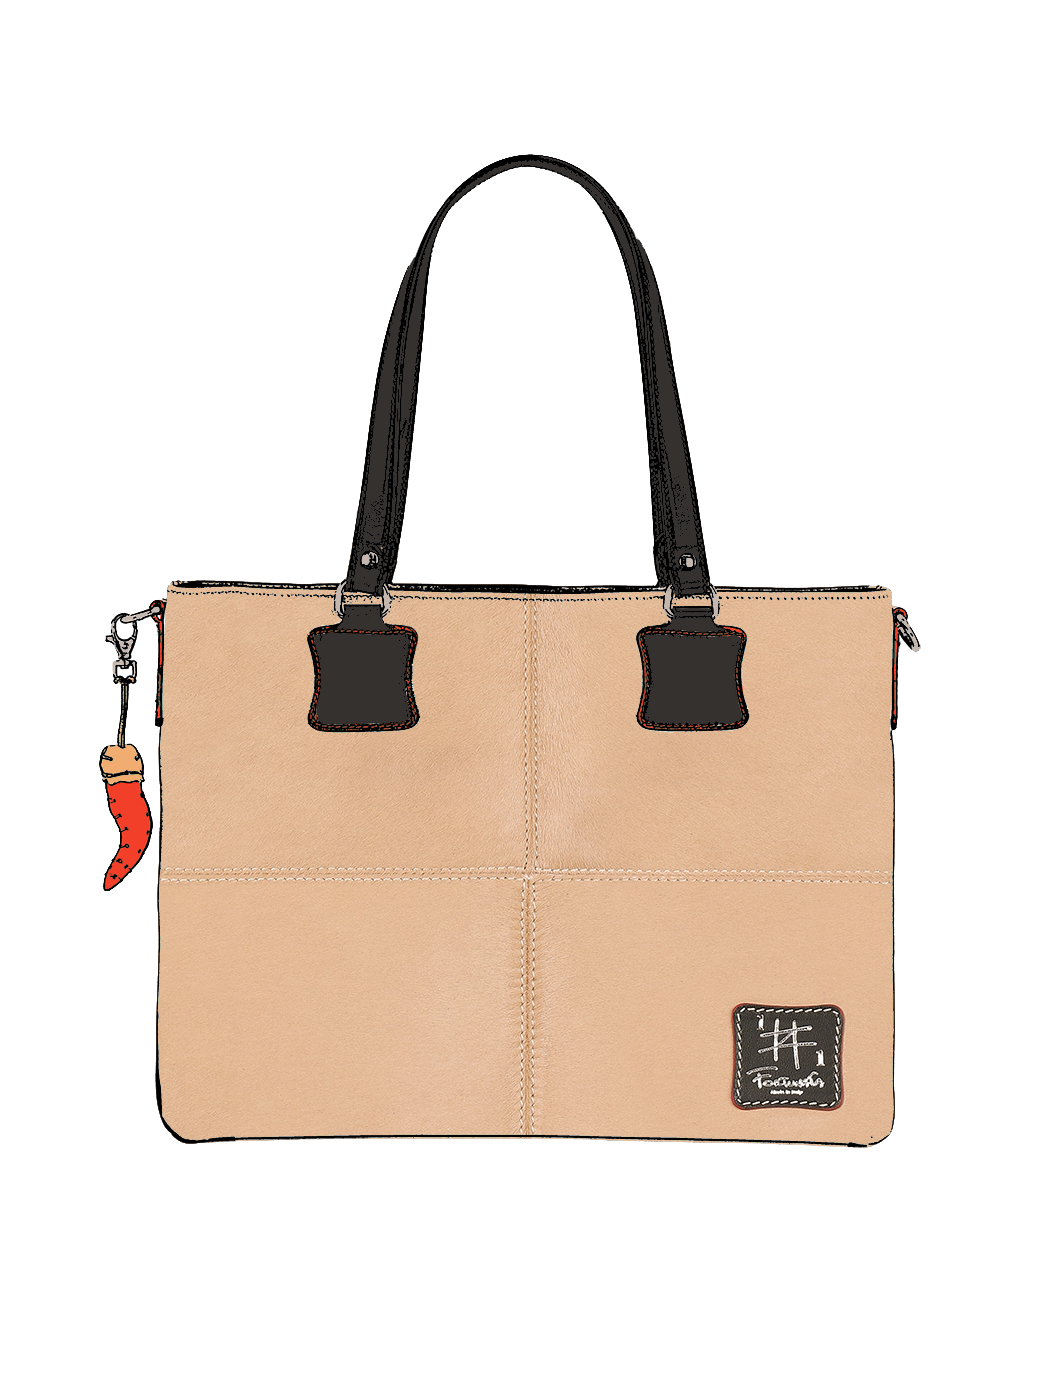 Via Piaggi Crossbody Handbag Women Mini beige Leather Case Purse Shoulder  Bag | eBay